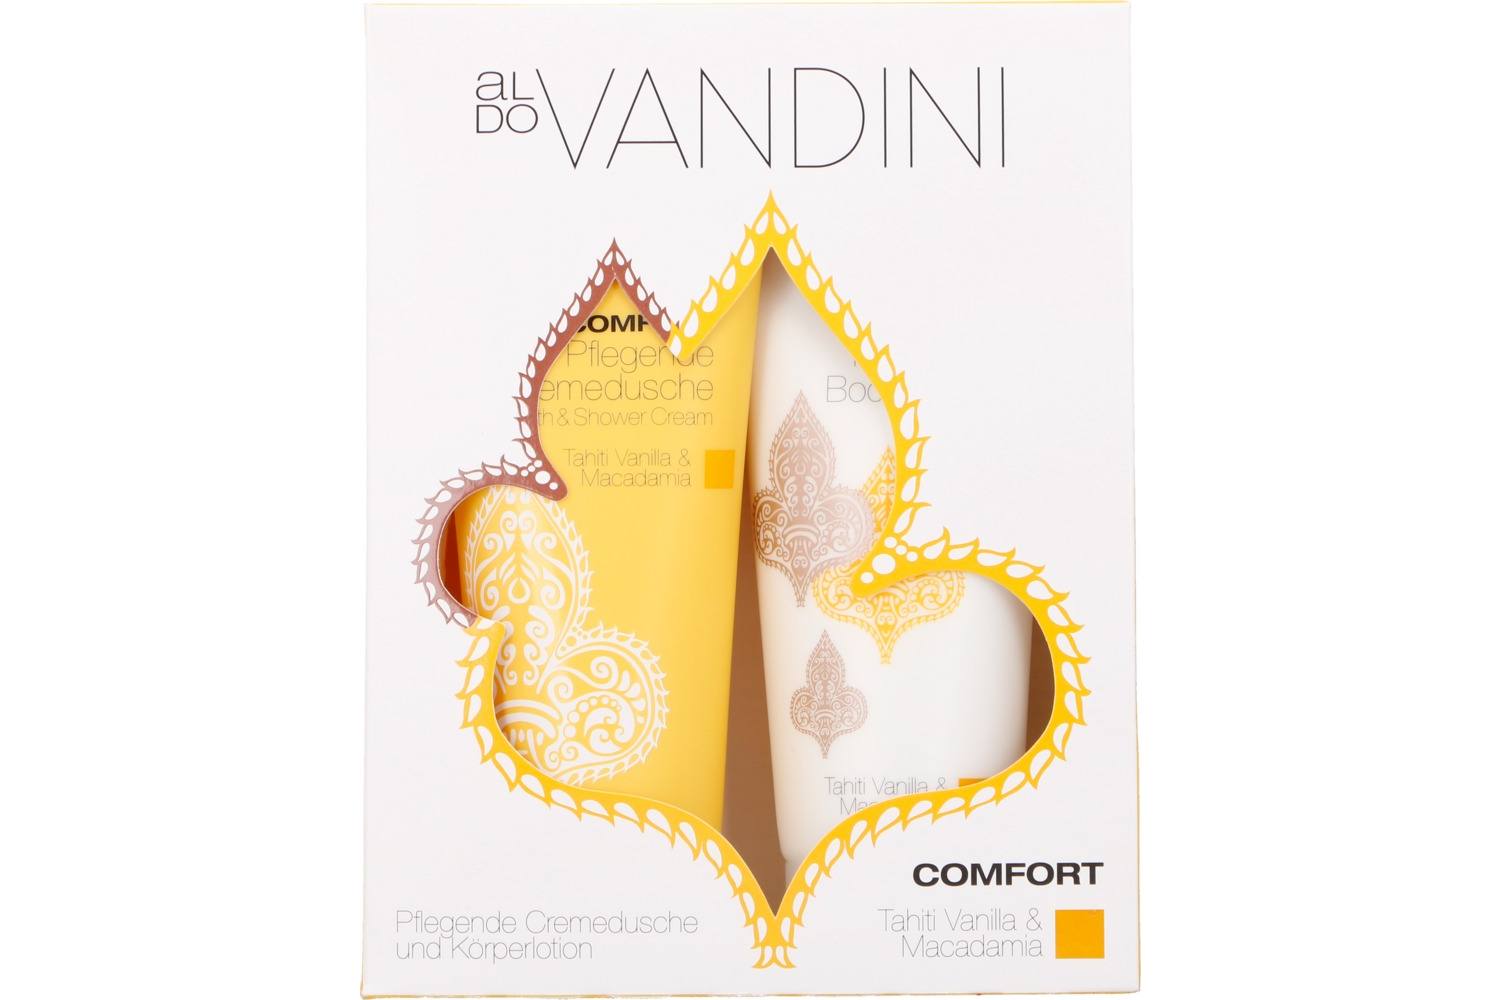 Set de bain, Aldo vandini, comfort, vanille de Tahiti et macadamia, 2 pièces 2